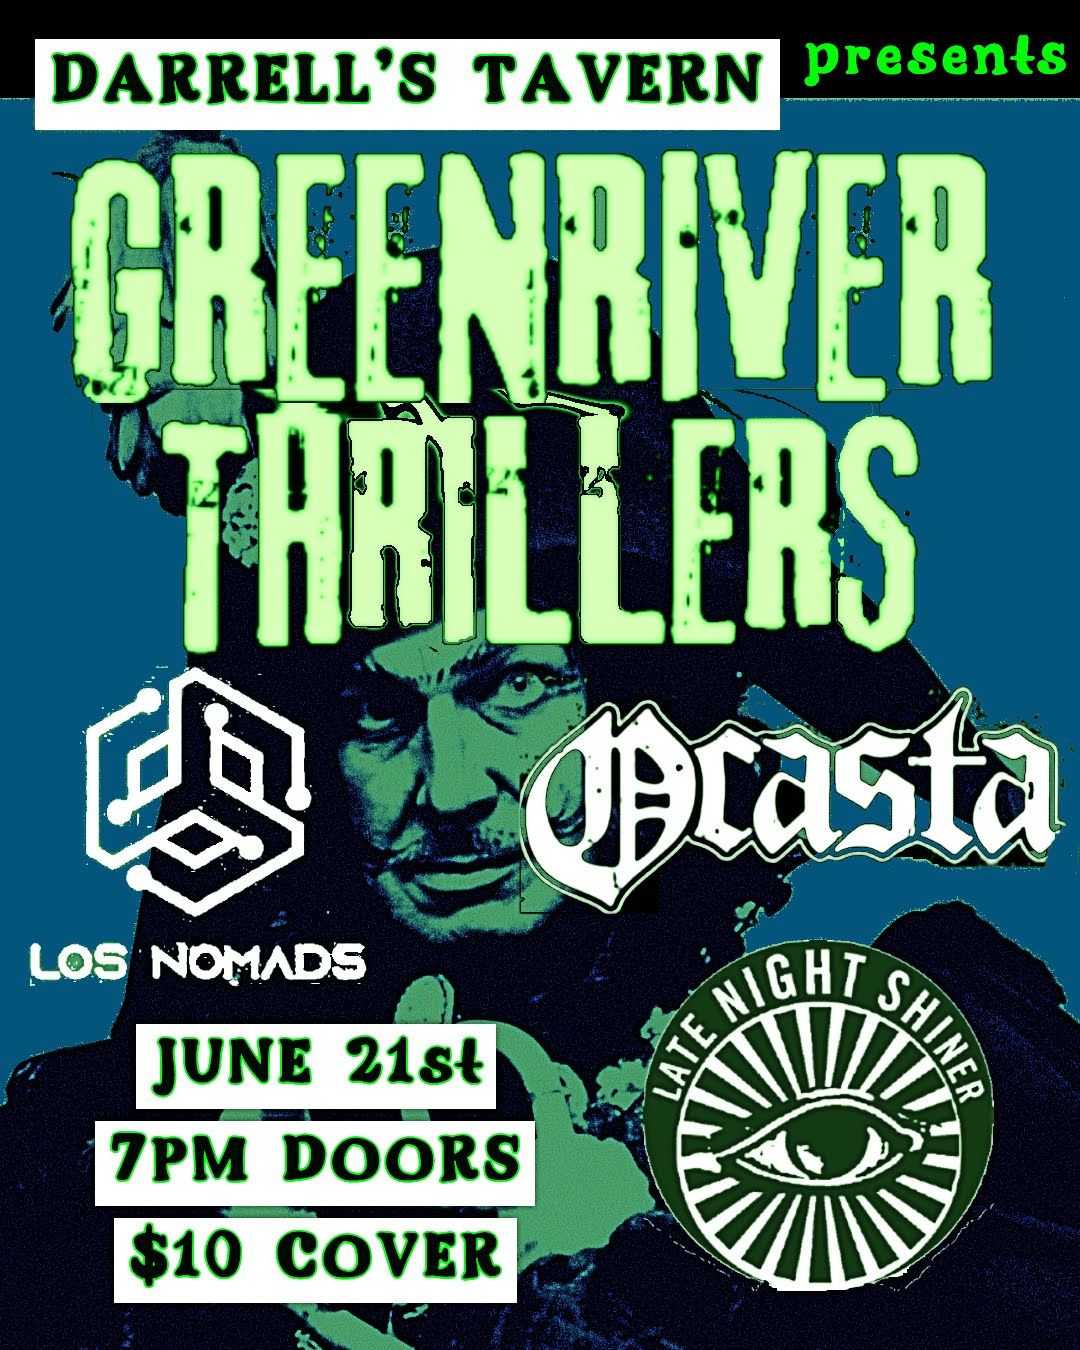 Greenriver Thrillers, Los Nomads, Ocasta, Late Night Shiner